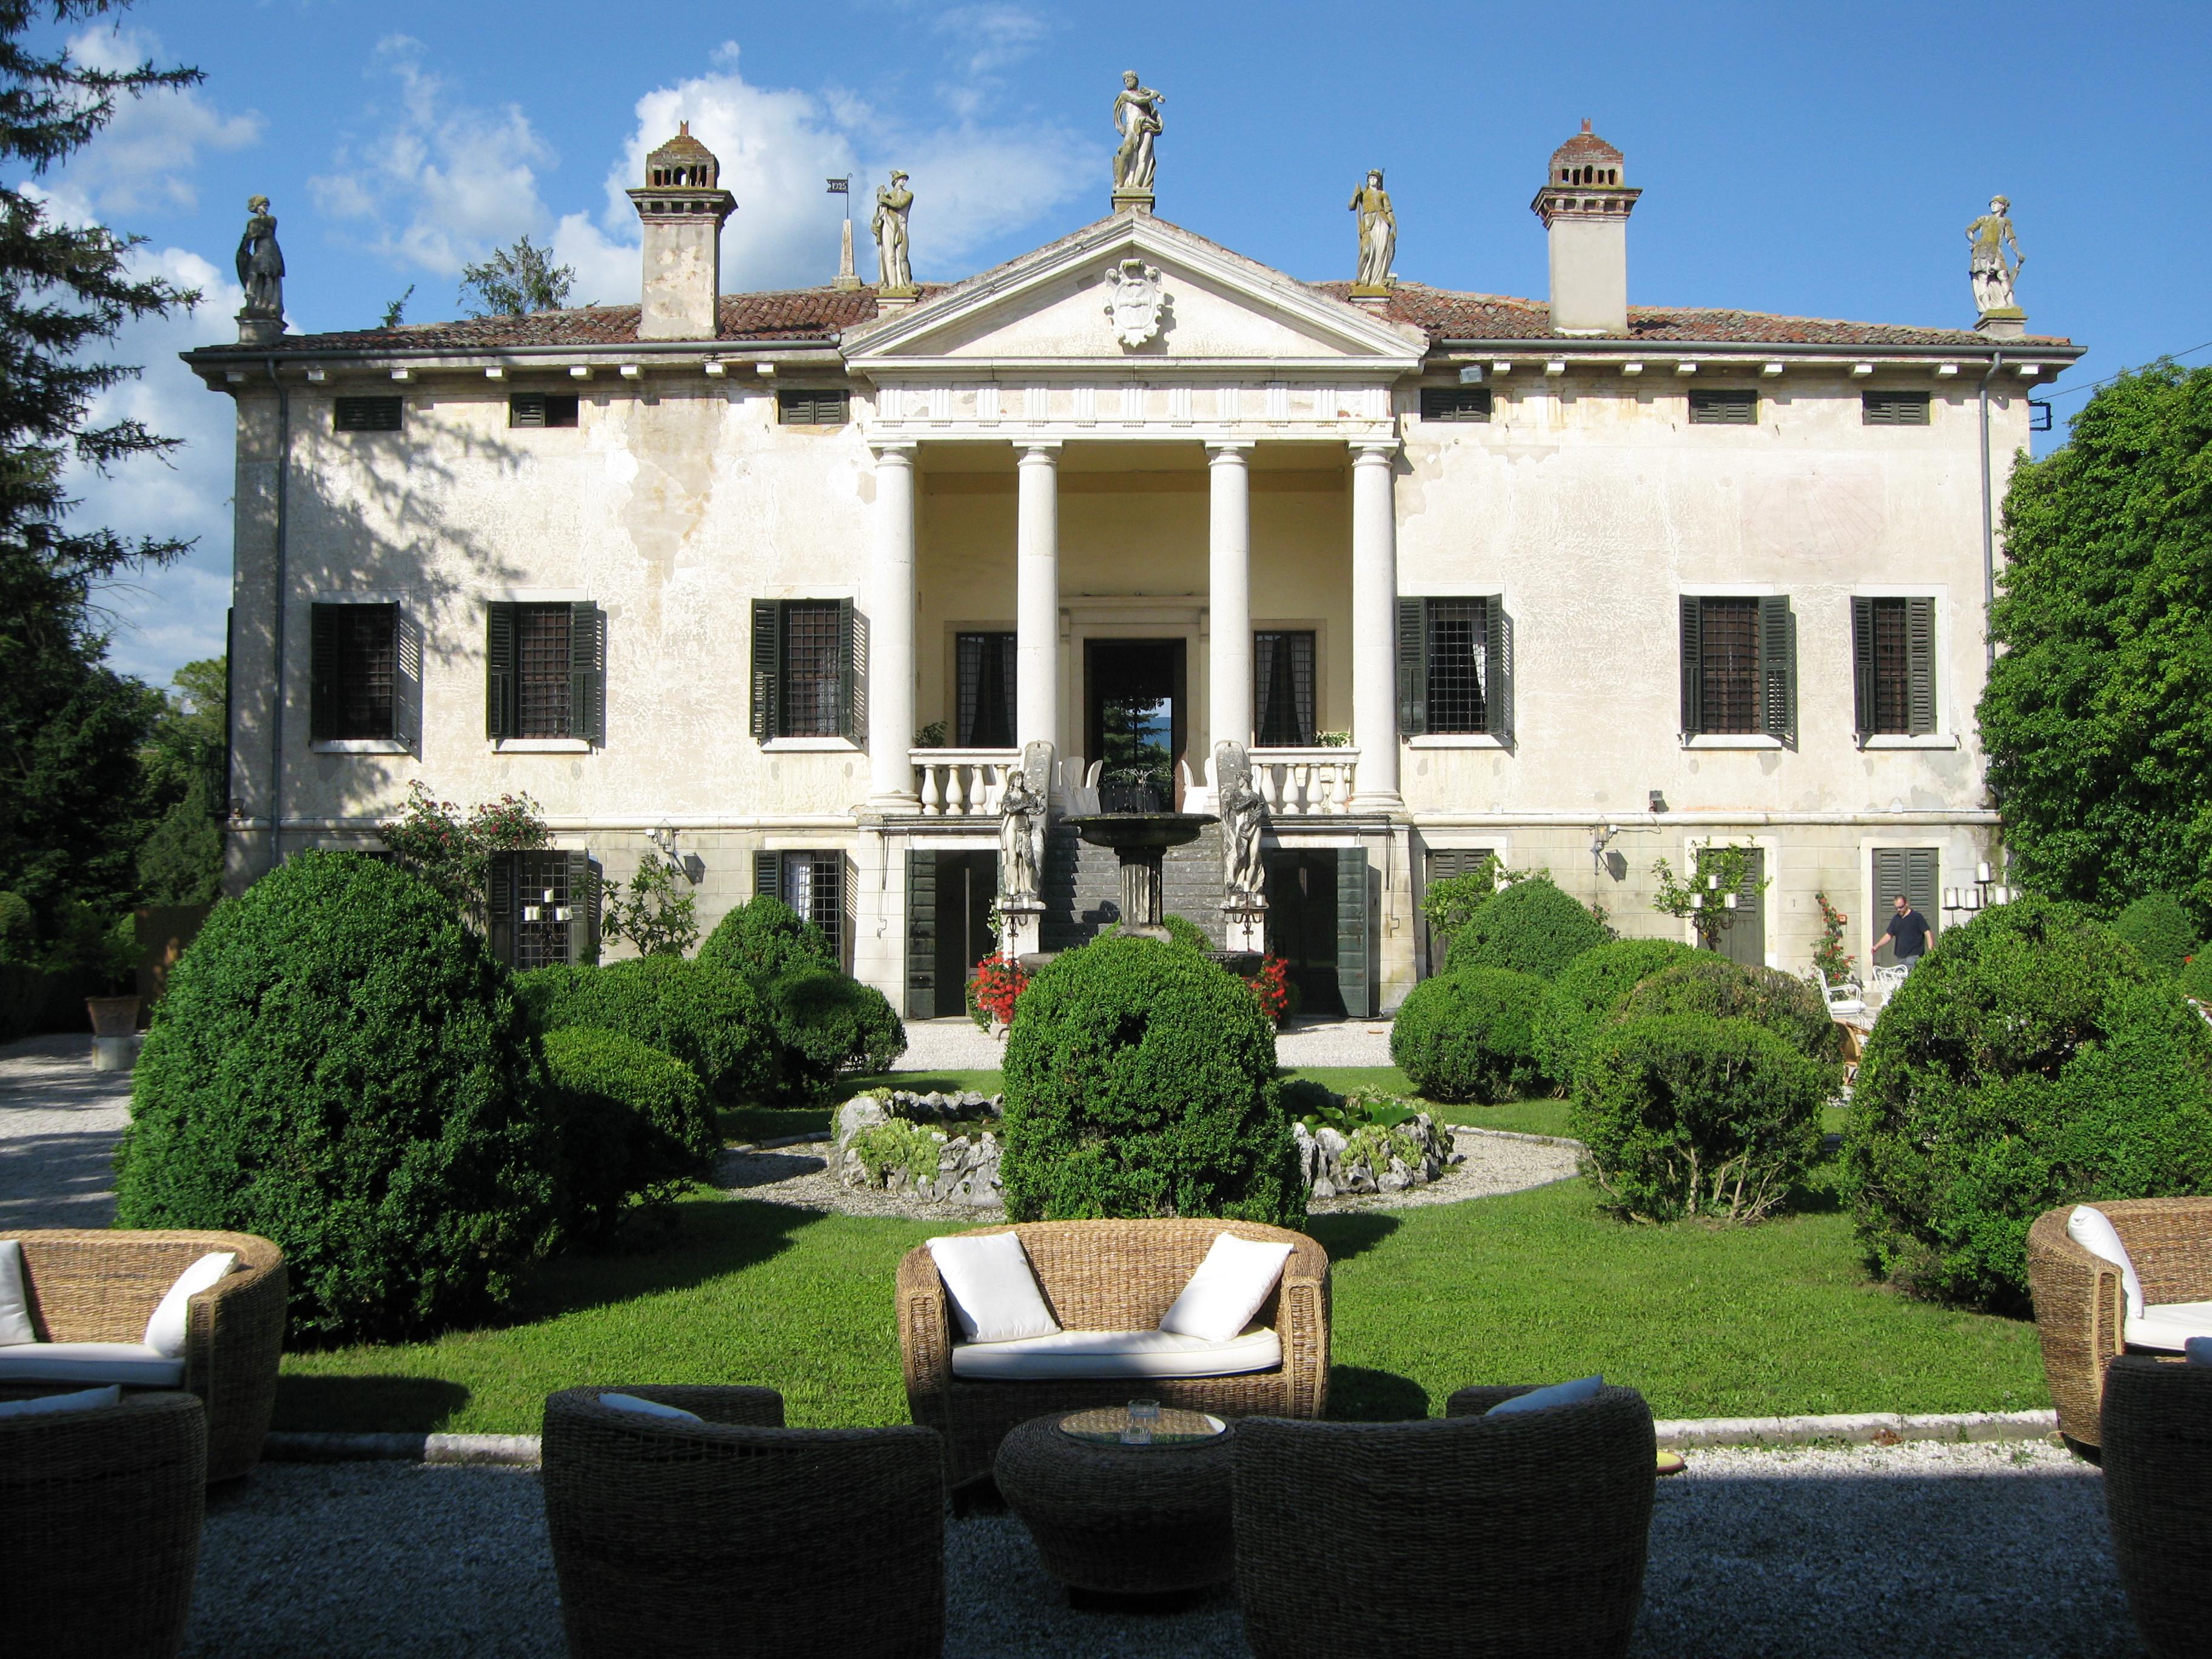 LA SERENELLA West Wing - Villas for Rent in San Pietro In Cariano, Veneto,  Italy - Airbnb